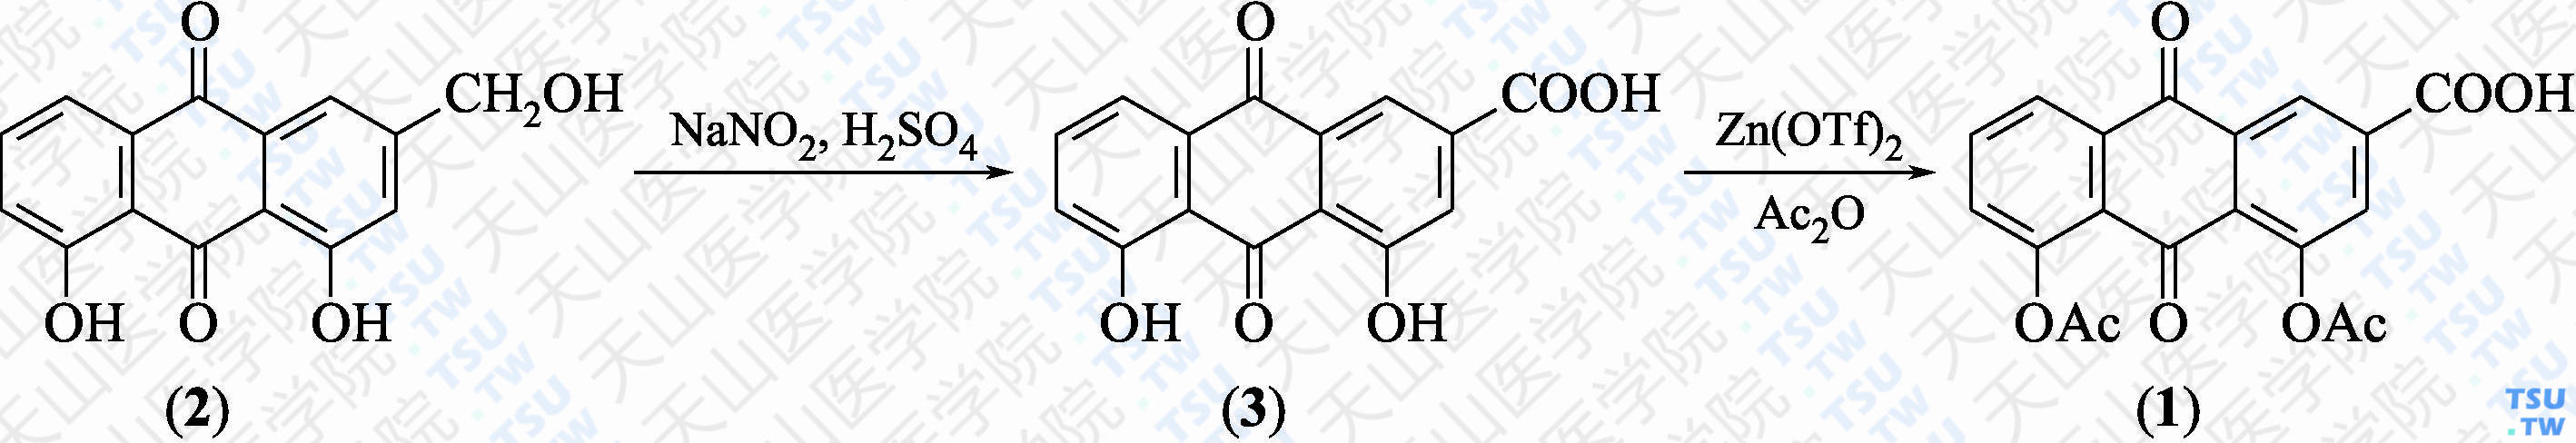 双醋瑞因（分子式：C<sub>19</sub>H<sub>12</sub>O<sub>8</sub>）的合成方法路线及其结构式